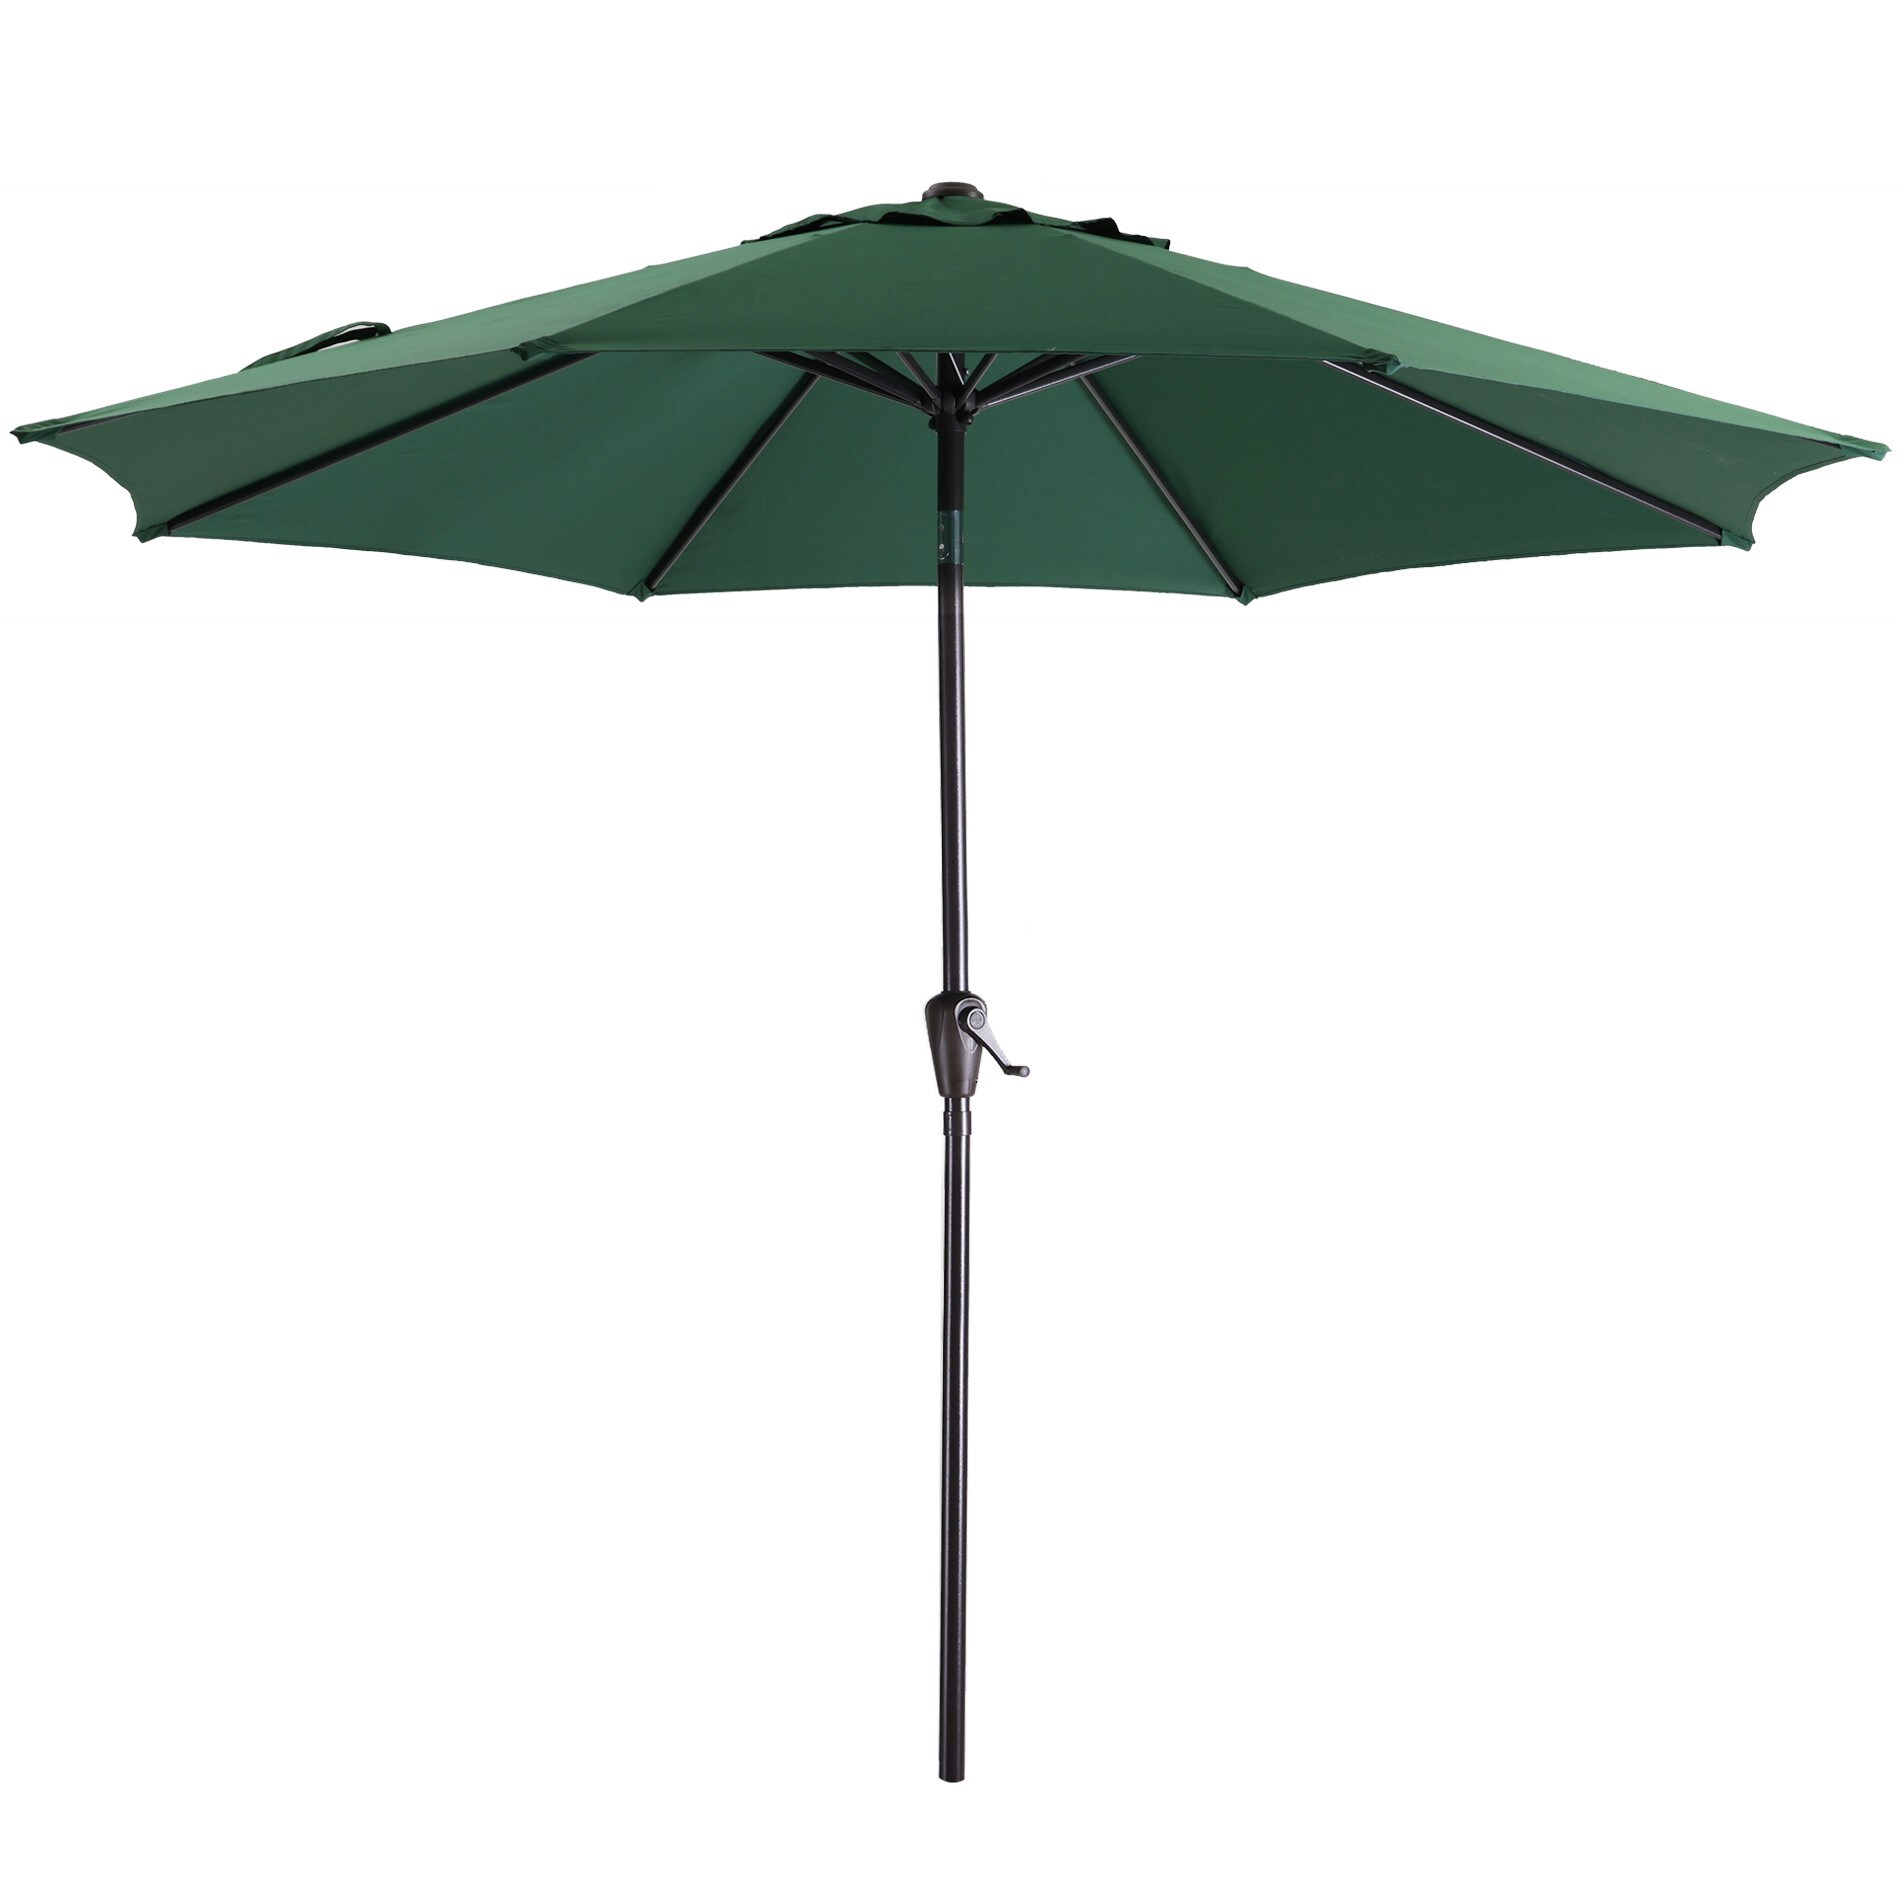 Blissun 9 Outdoor Aluminum Patio Umbrella Market Striped Umbrella with Push Button Tilt and Crank Black & White Stripe 